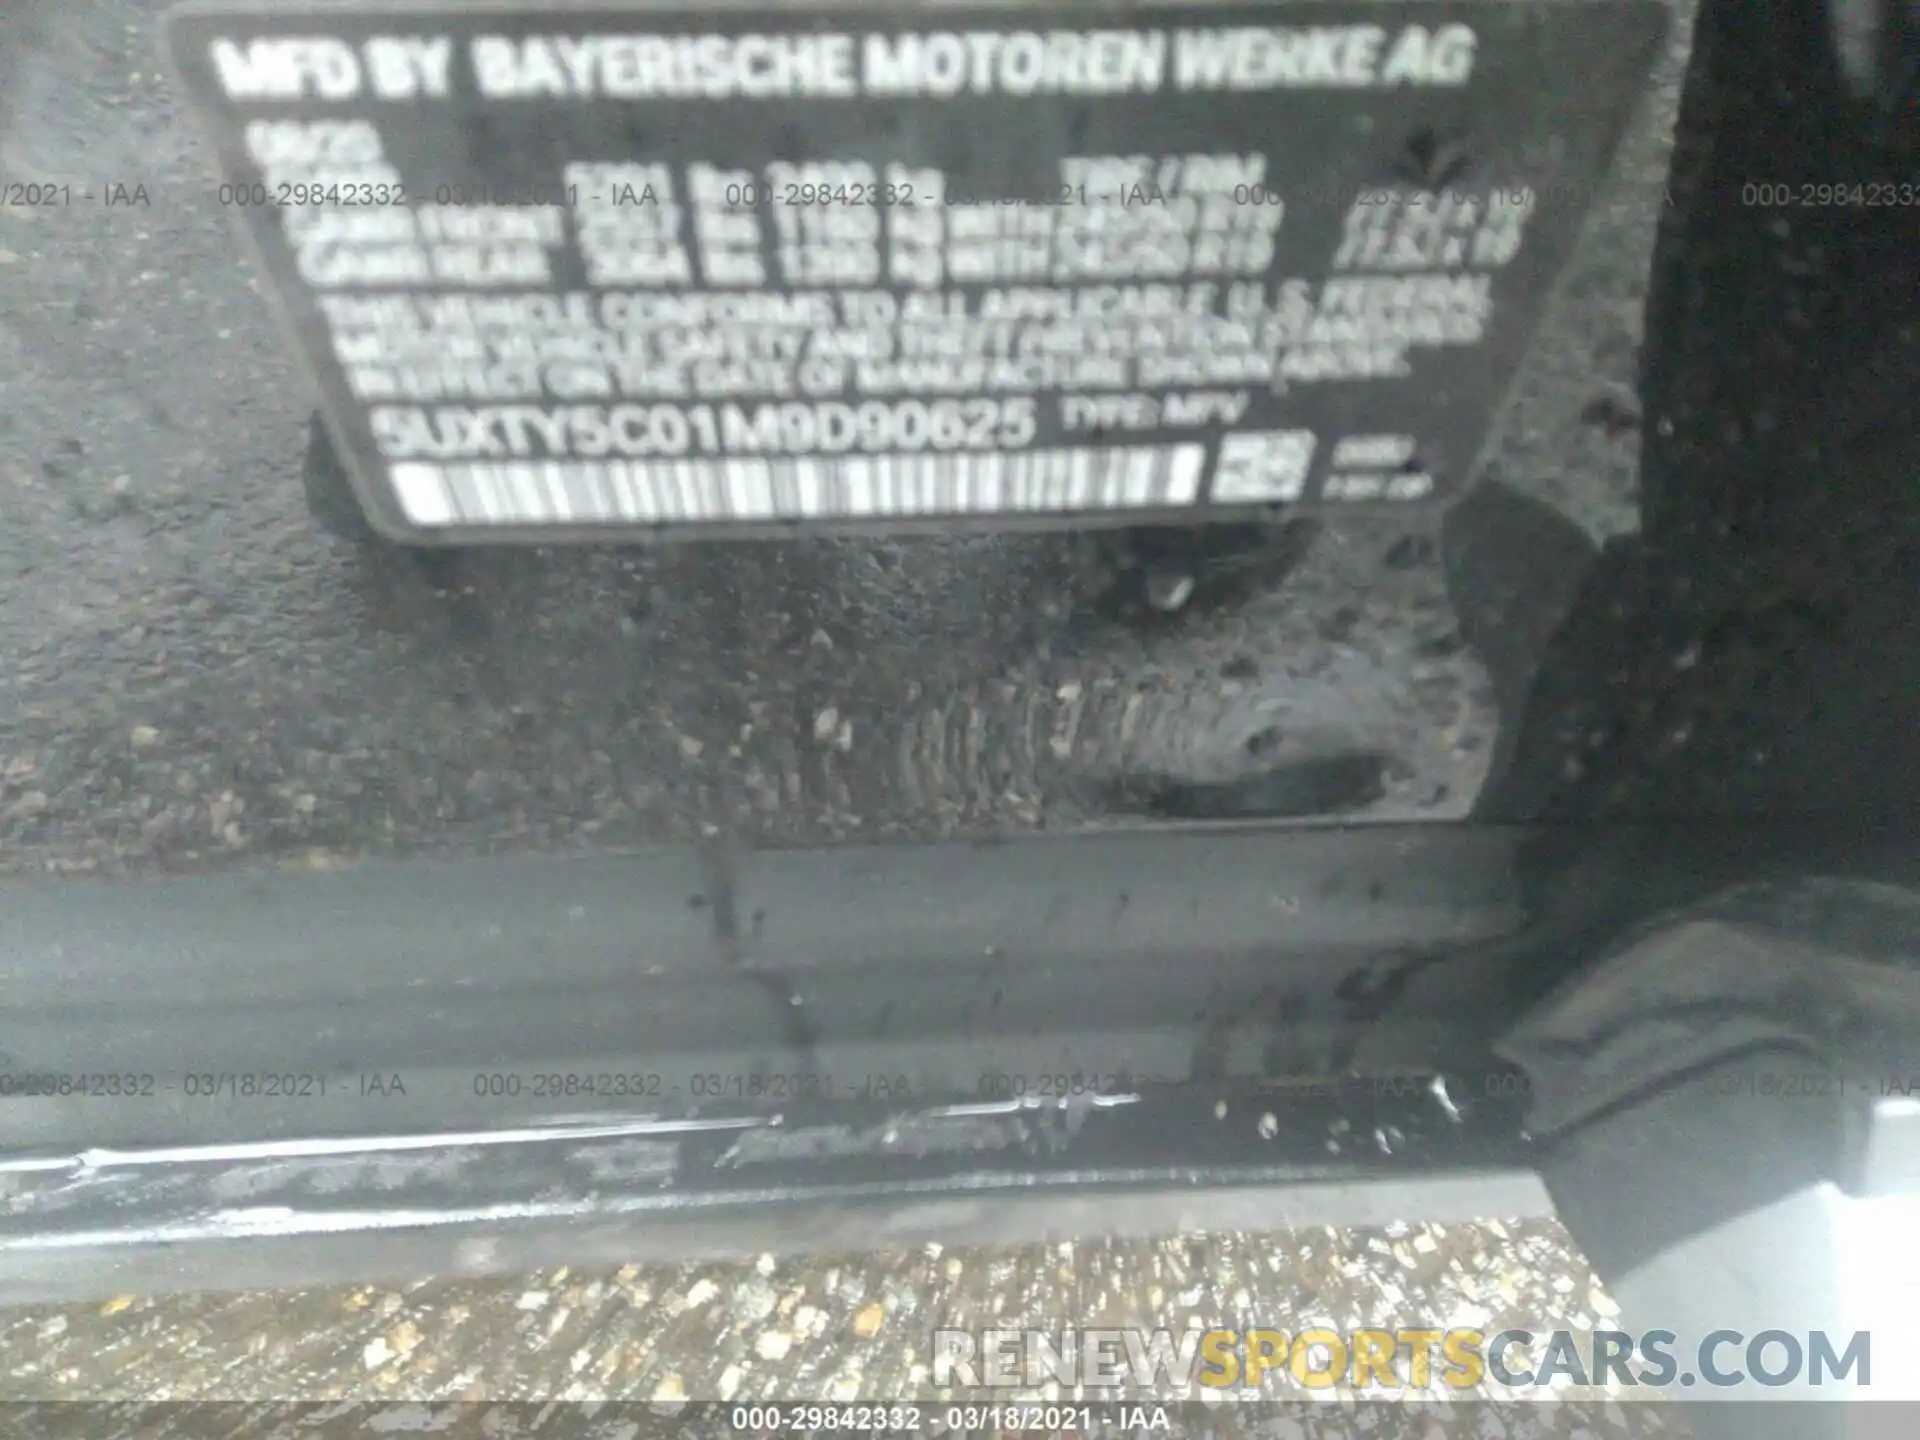 9 Photograph of a damaged car 5UXTY5C01M9D90625 BMW X3 2021